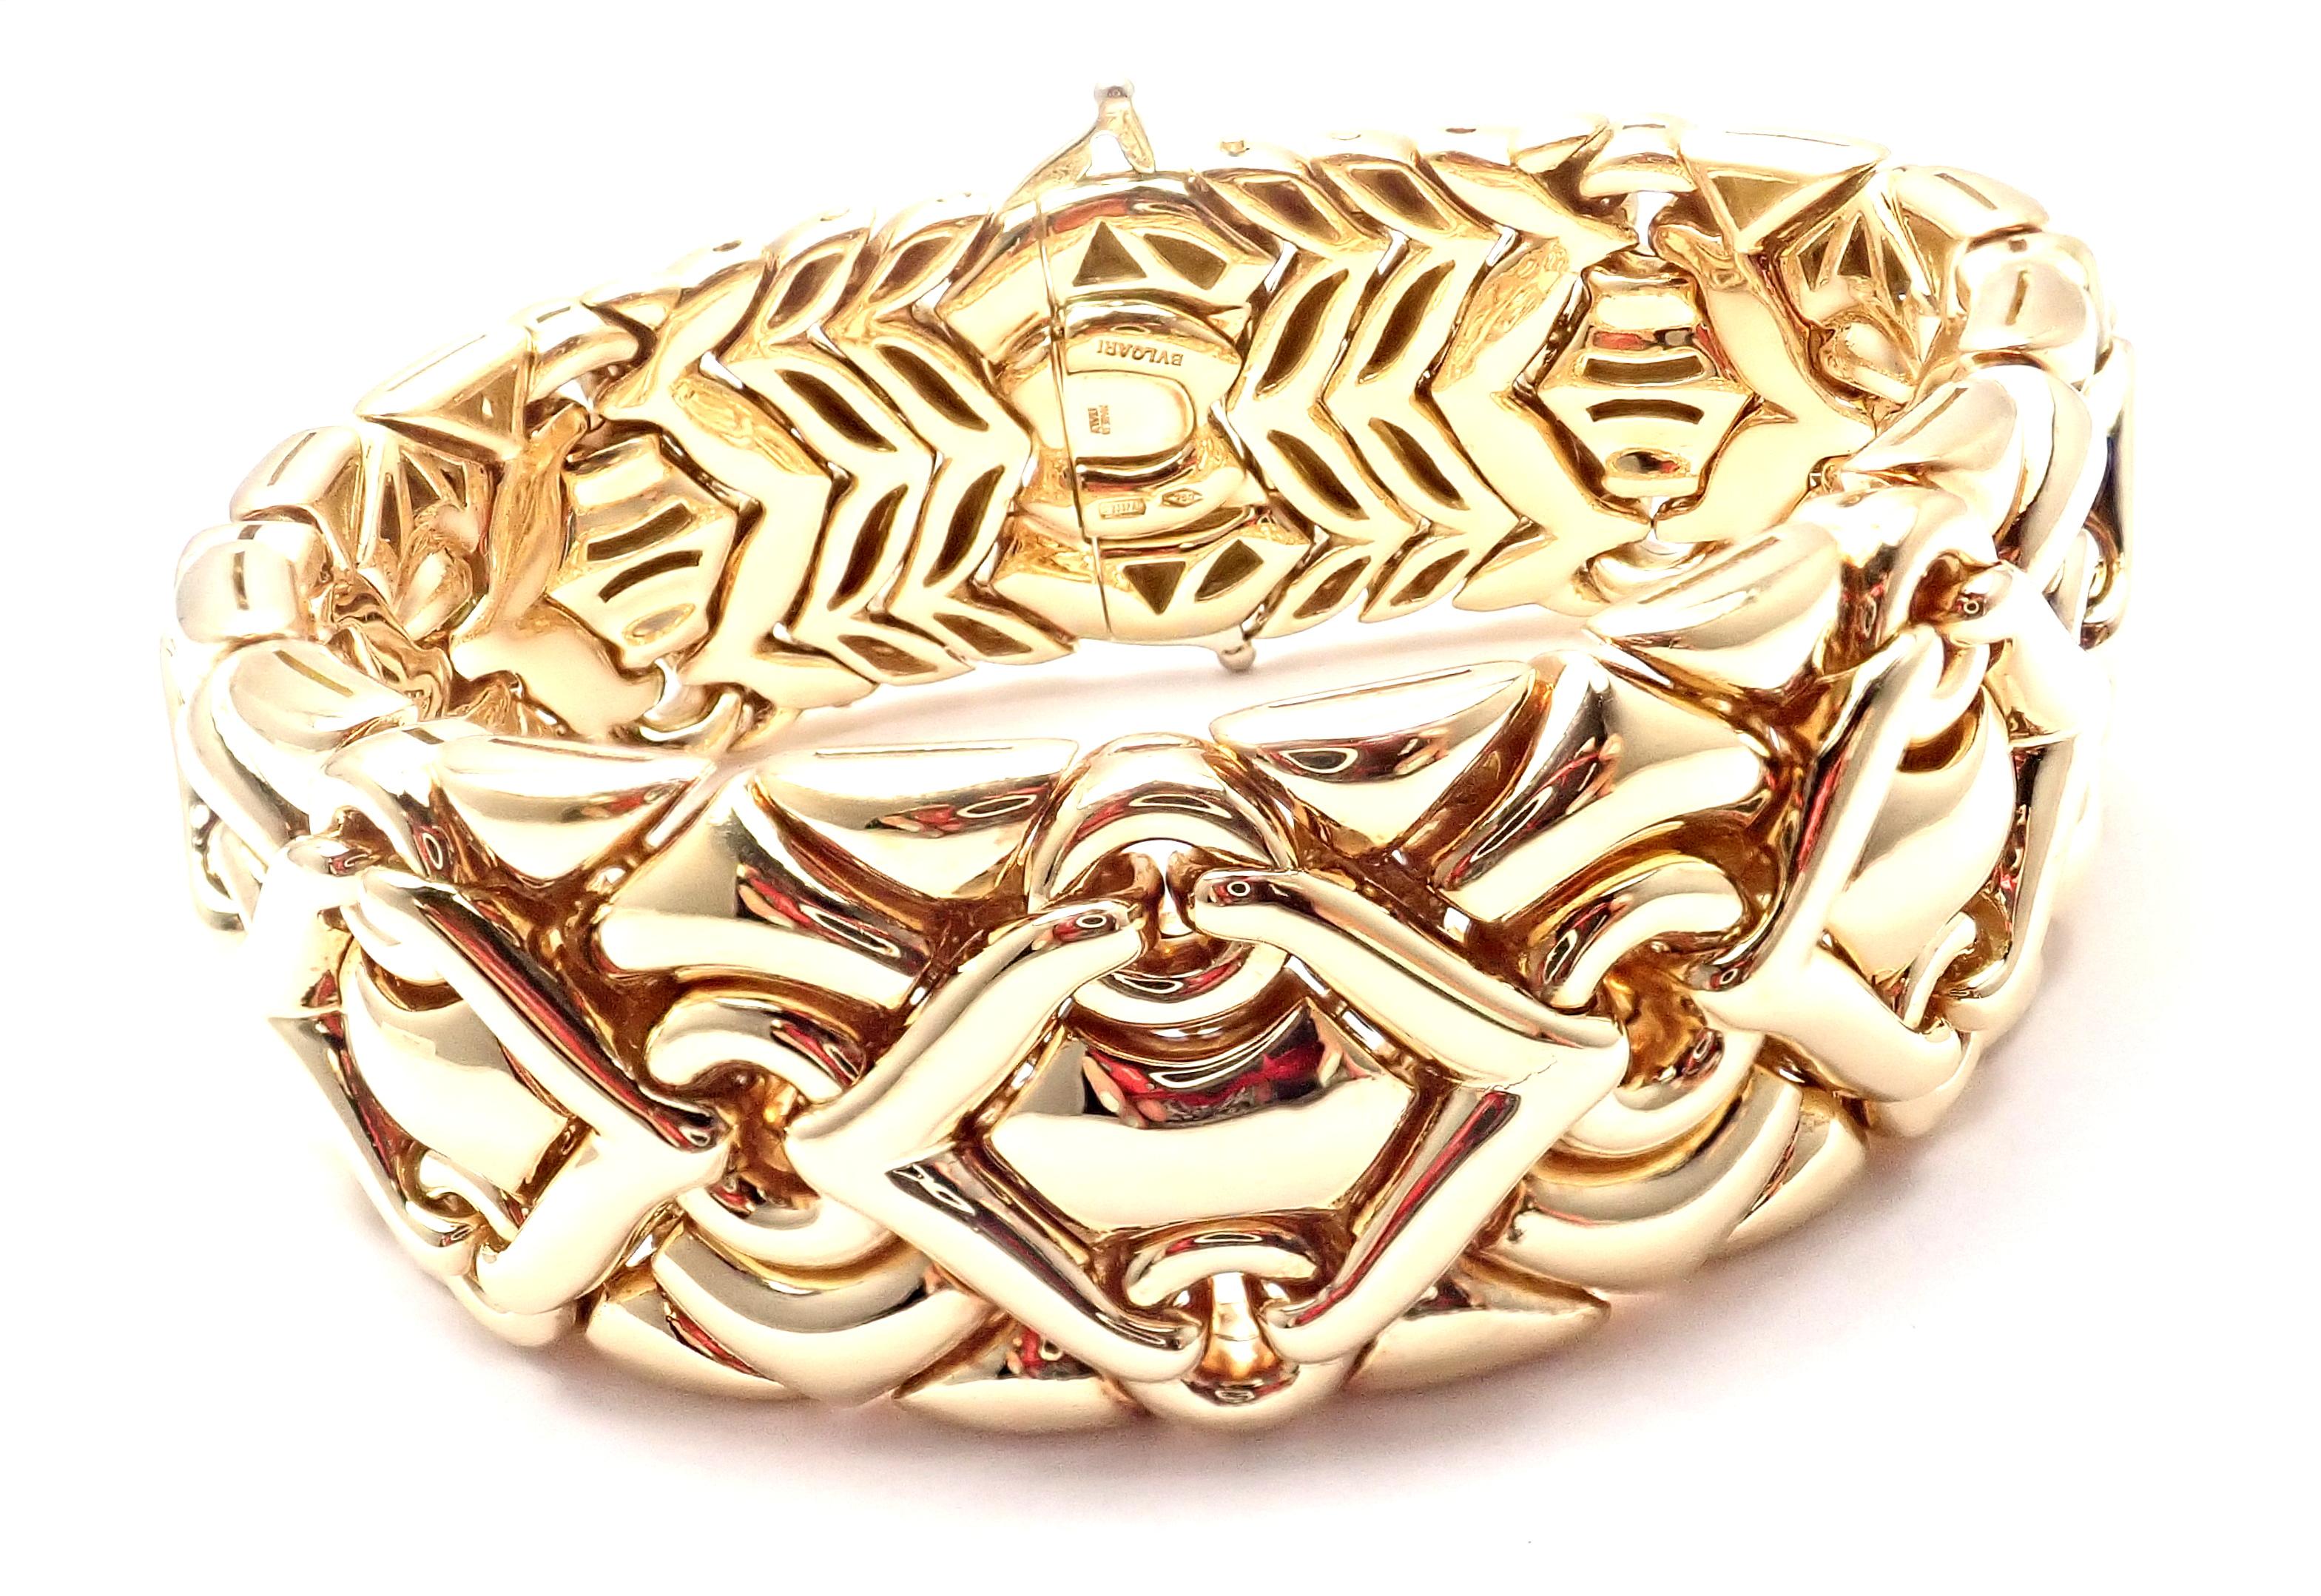 18k Yellow Gold Wide Link Trika Bracelet by Bulgari. 
Details: 
Length: 7